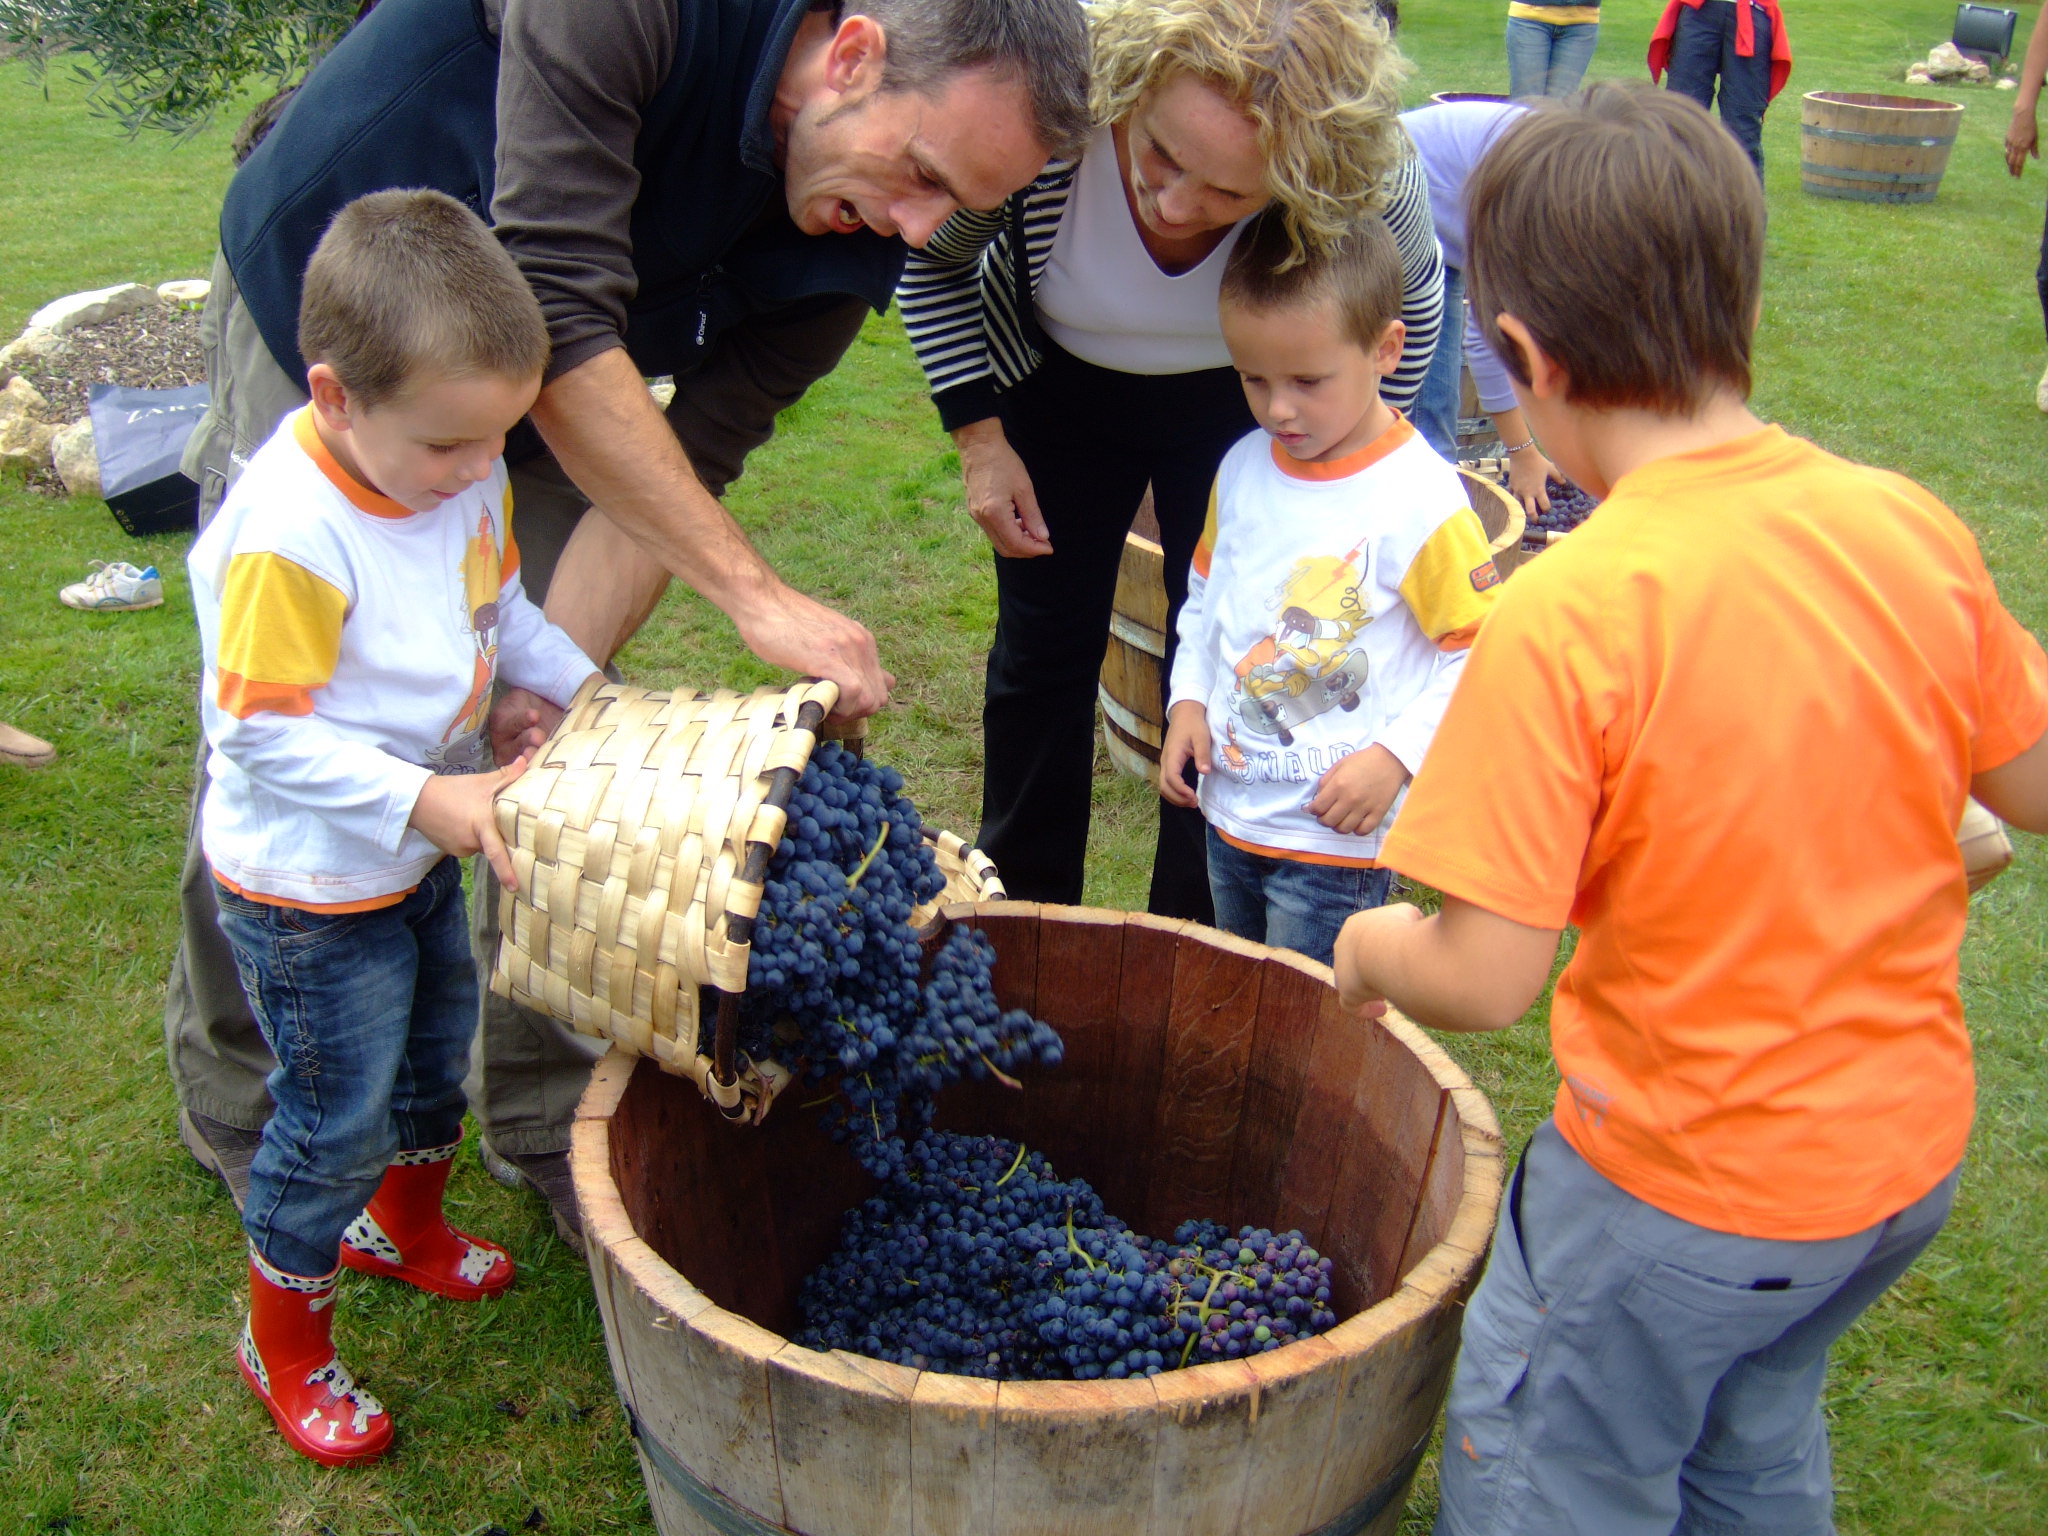 Wine tourism for kids